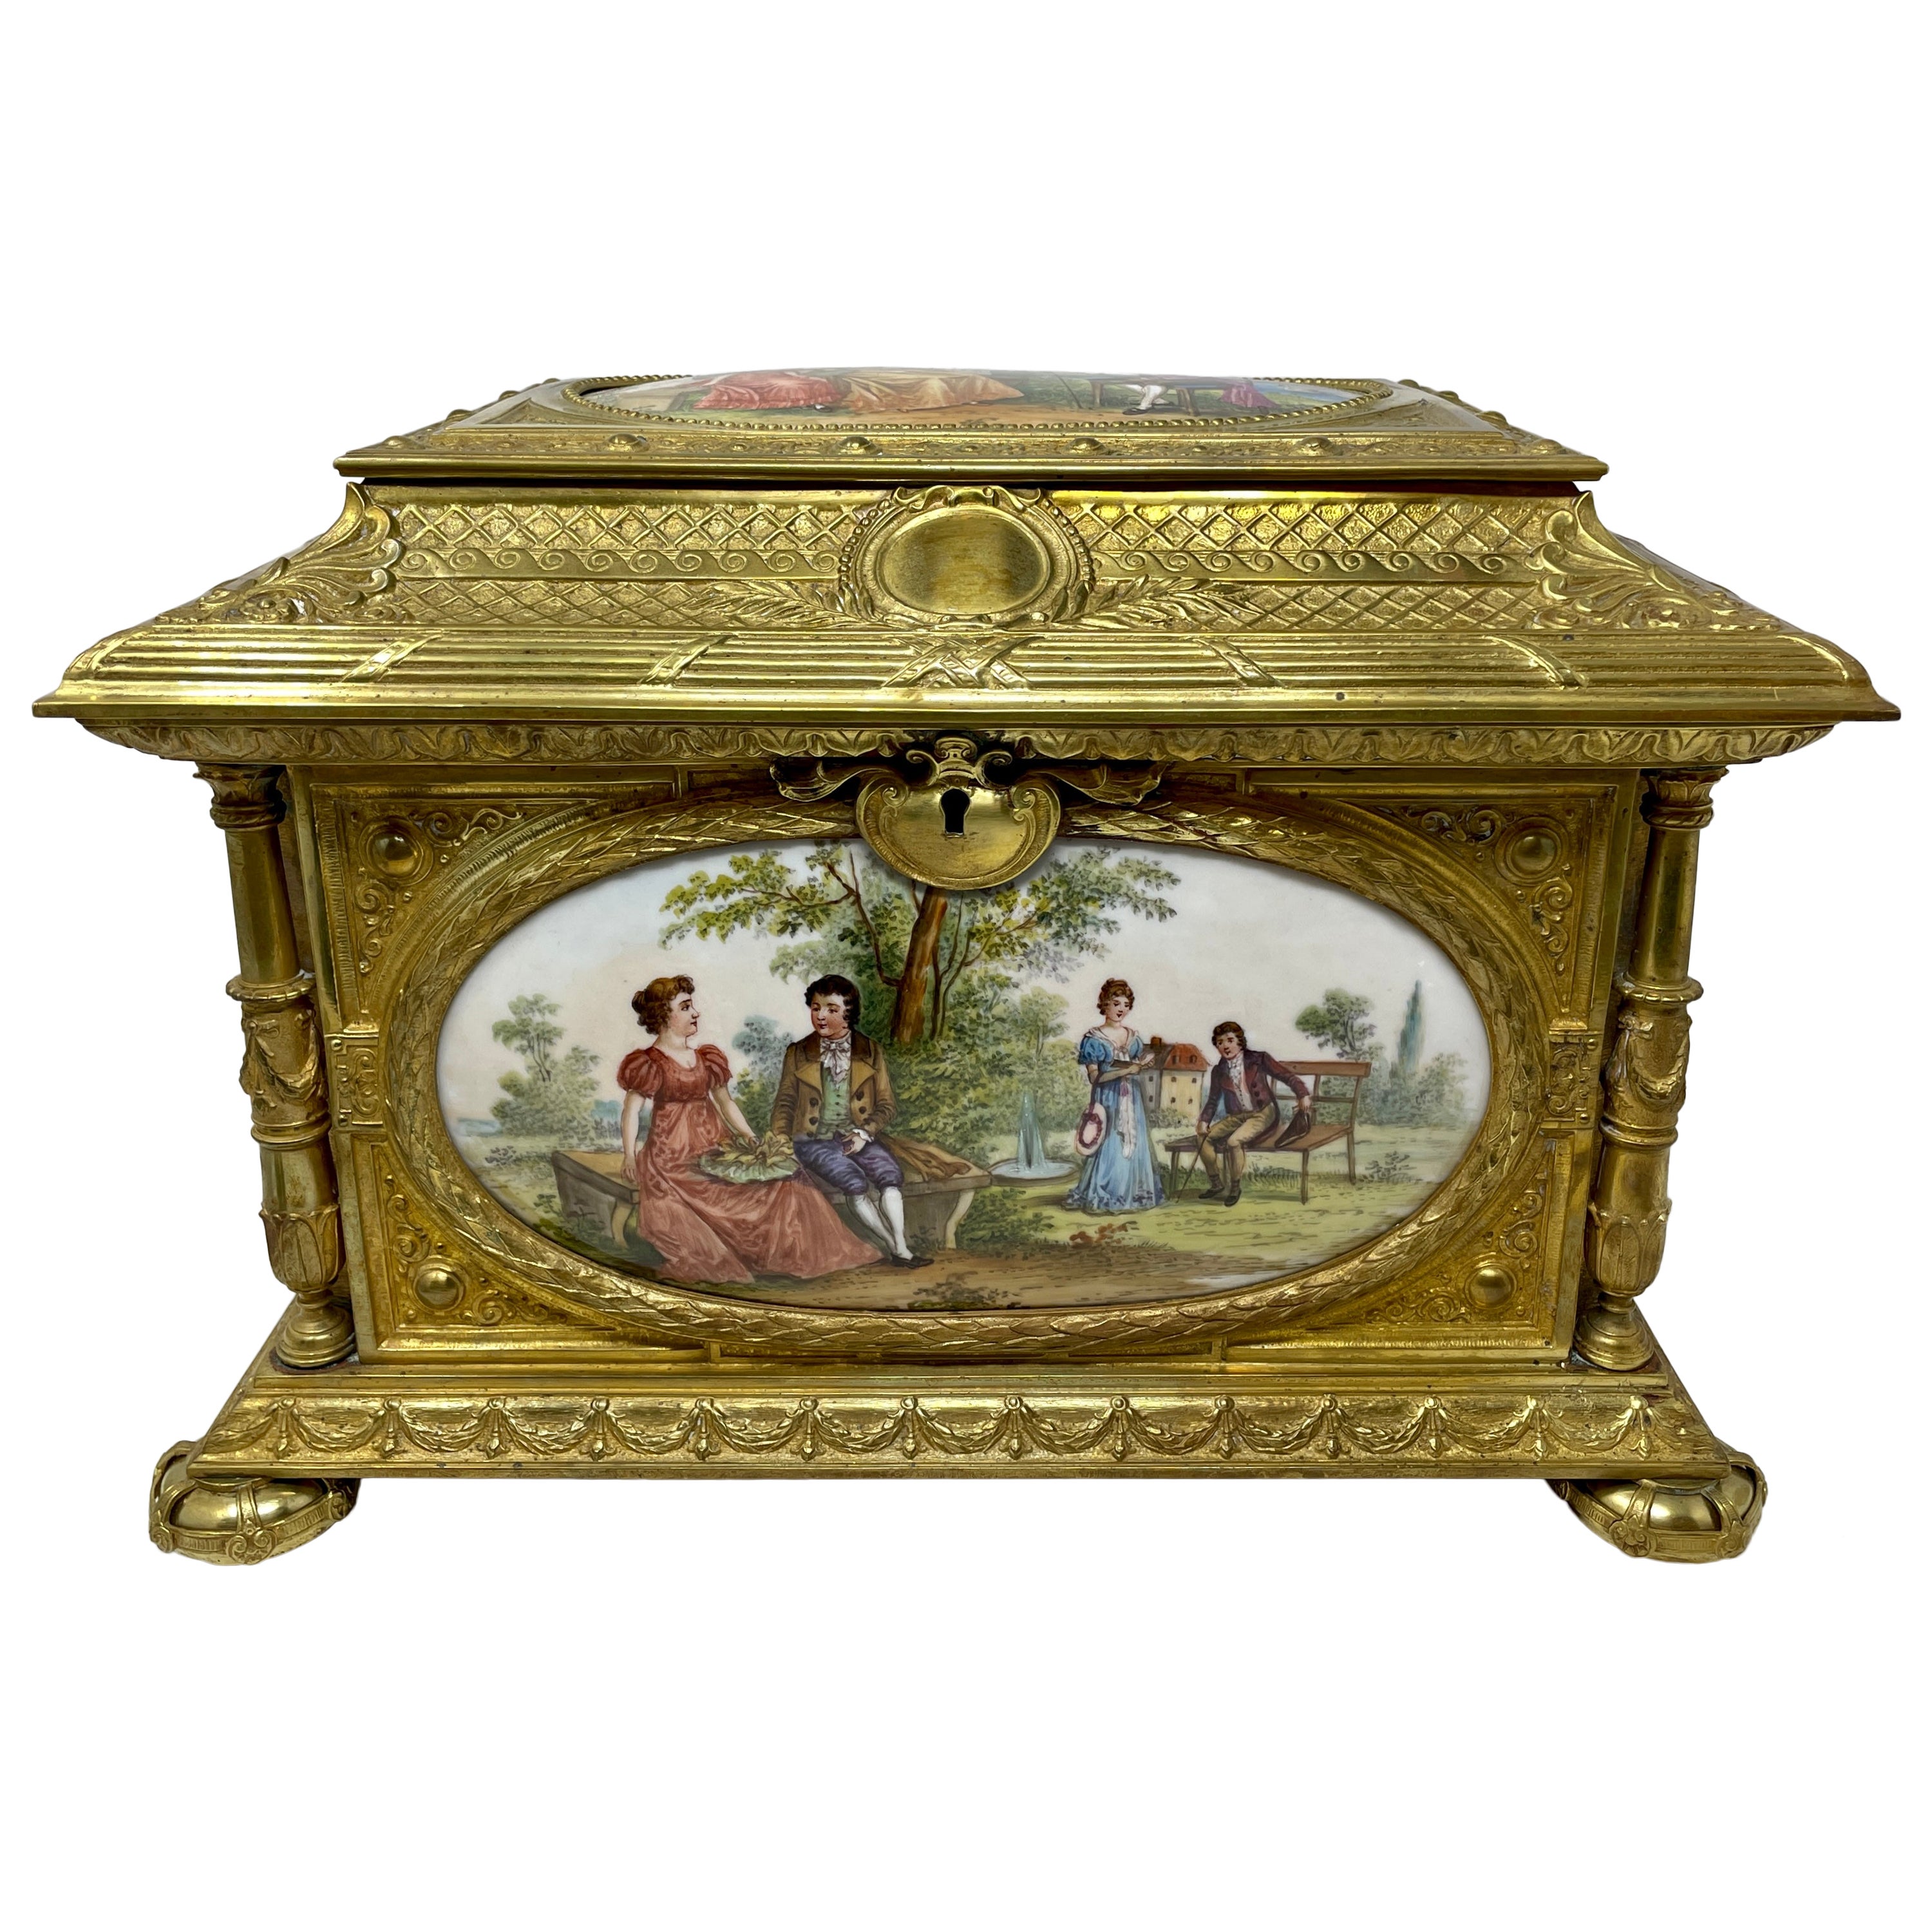 Antique German Porcelain and Ormolu Jewel Box, Circa 1875-1885.